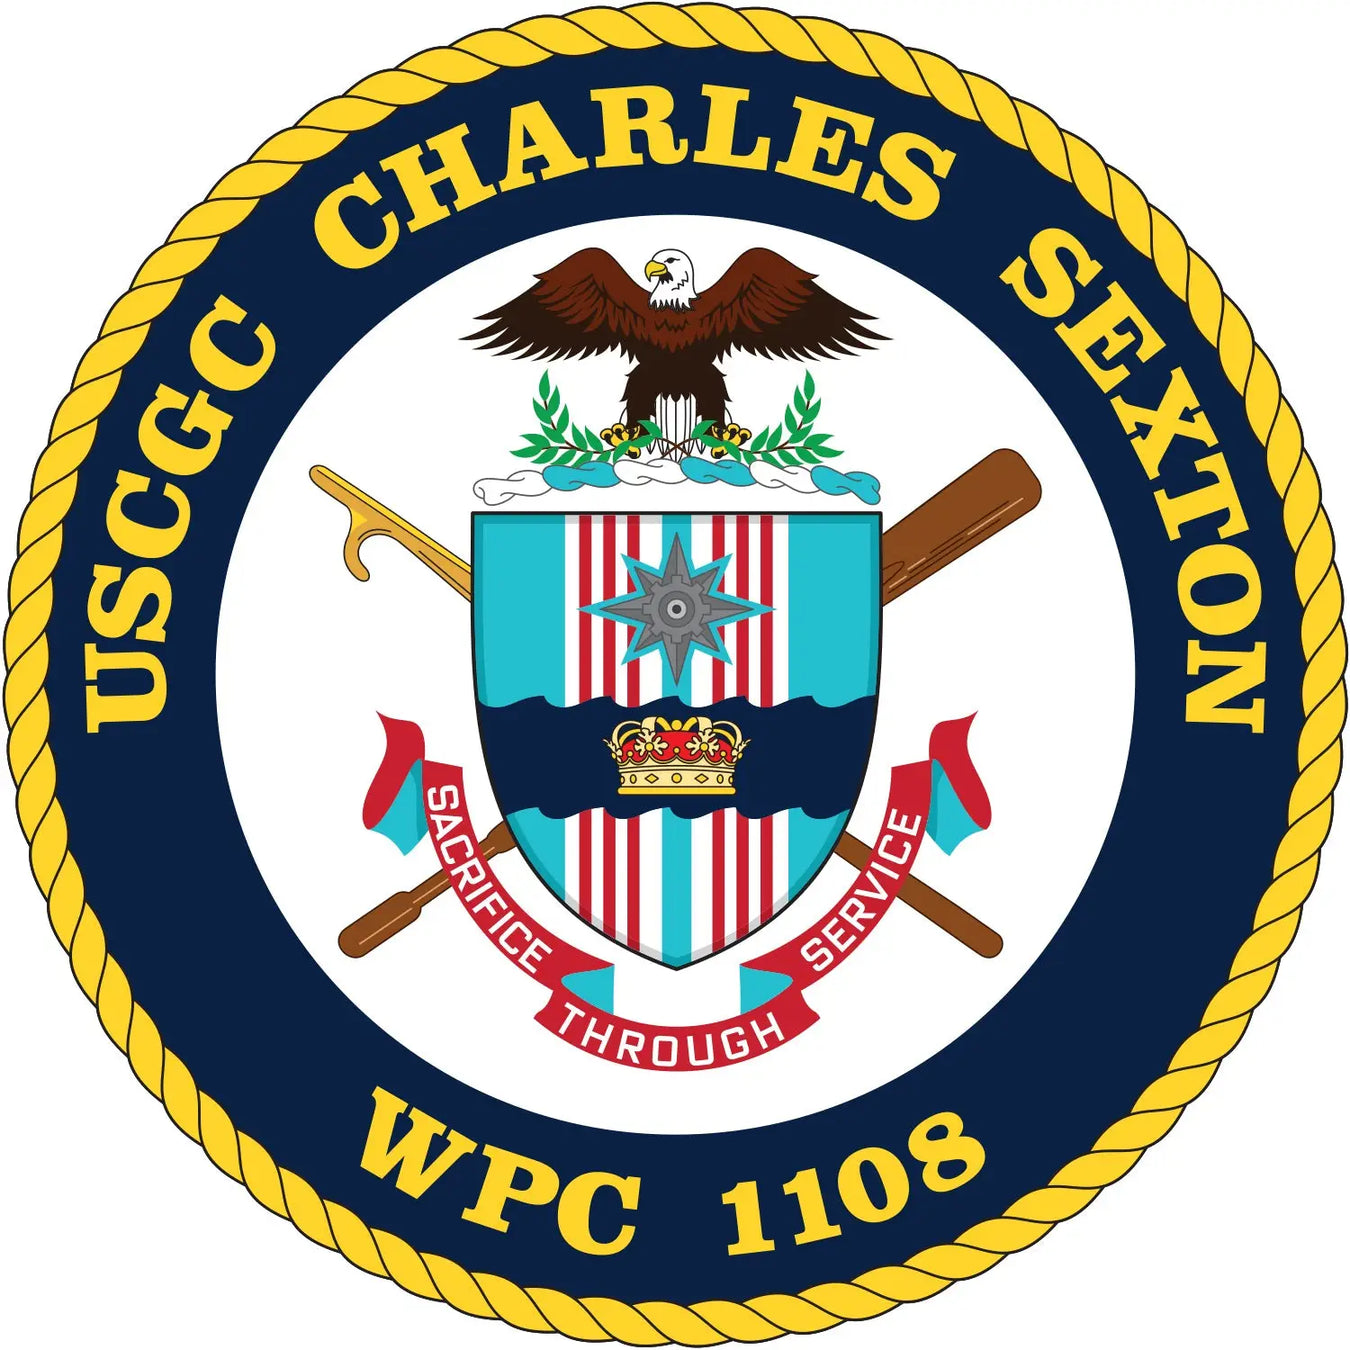 USCGC Charles Sexton (WPC-1108)